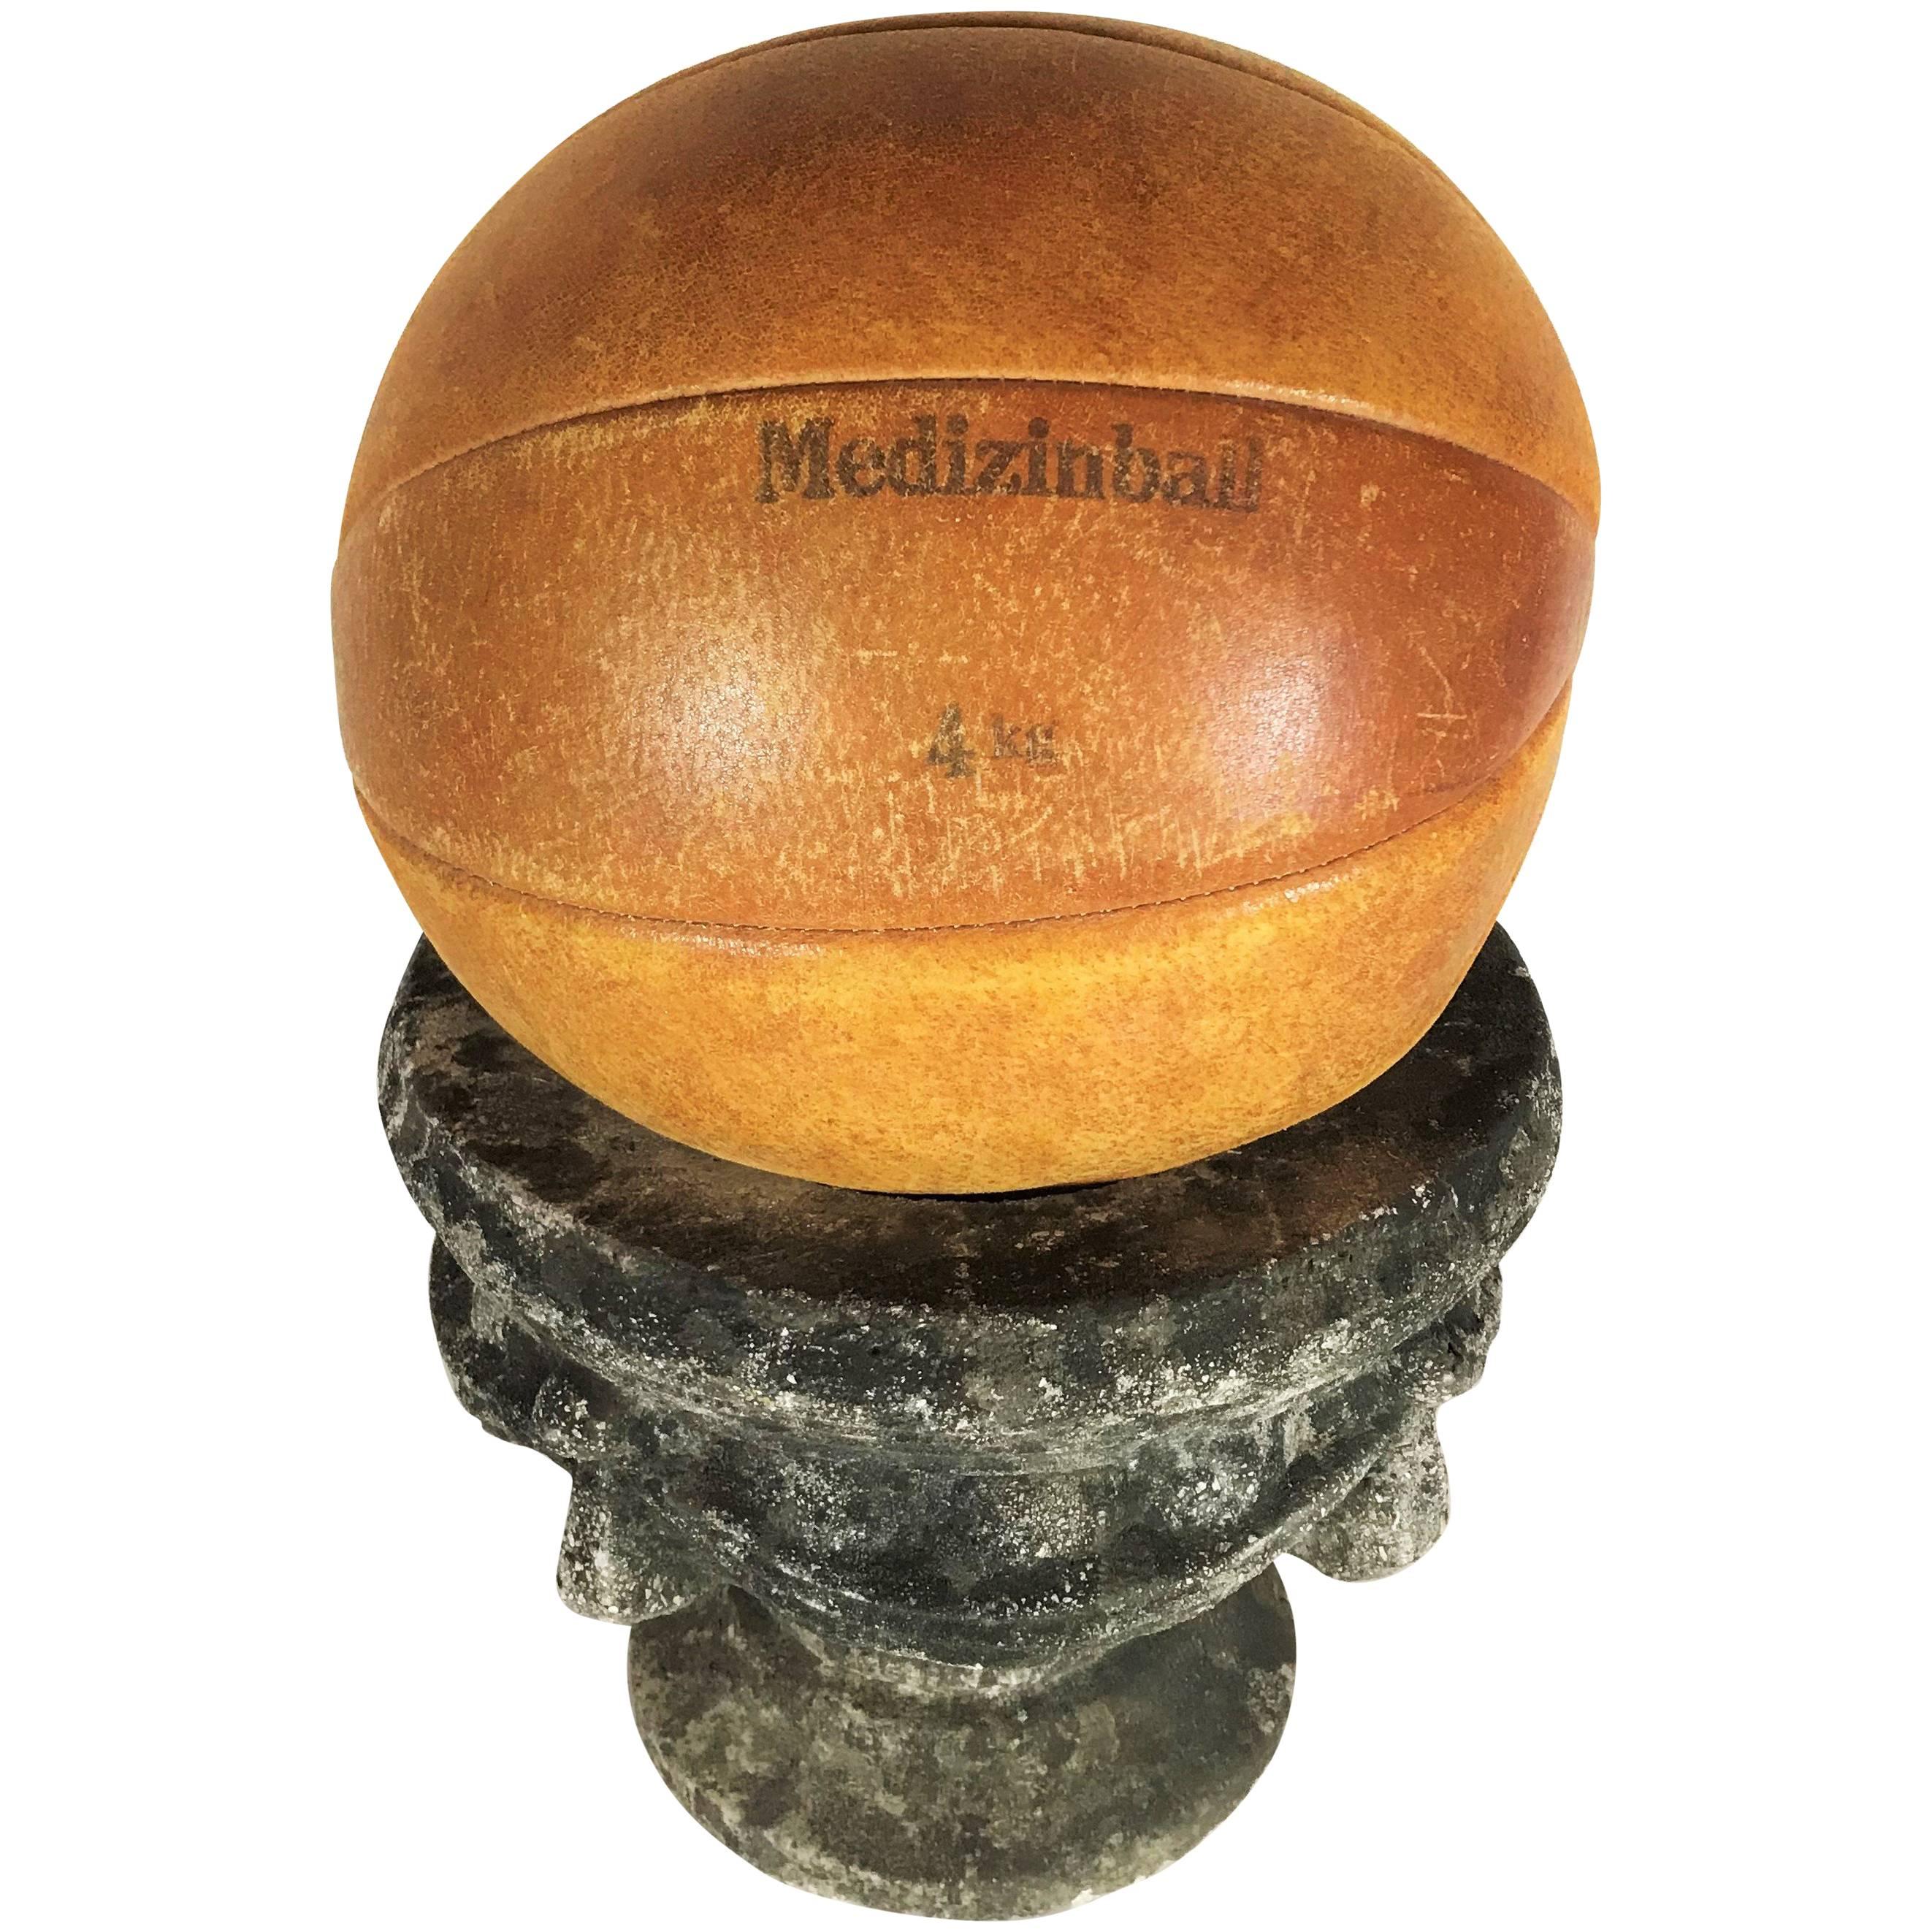 Vintage Leather Medicine Ball, 1930s Germany